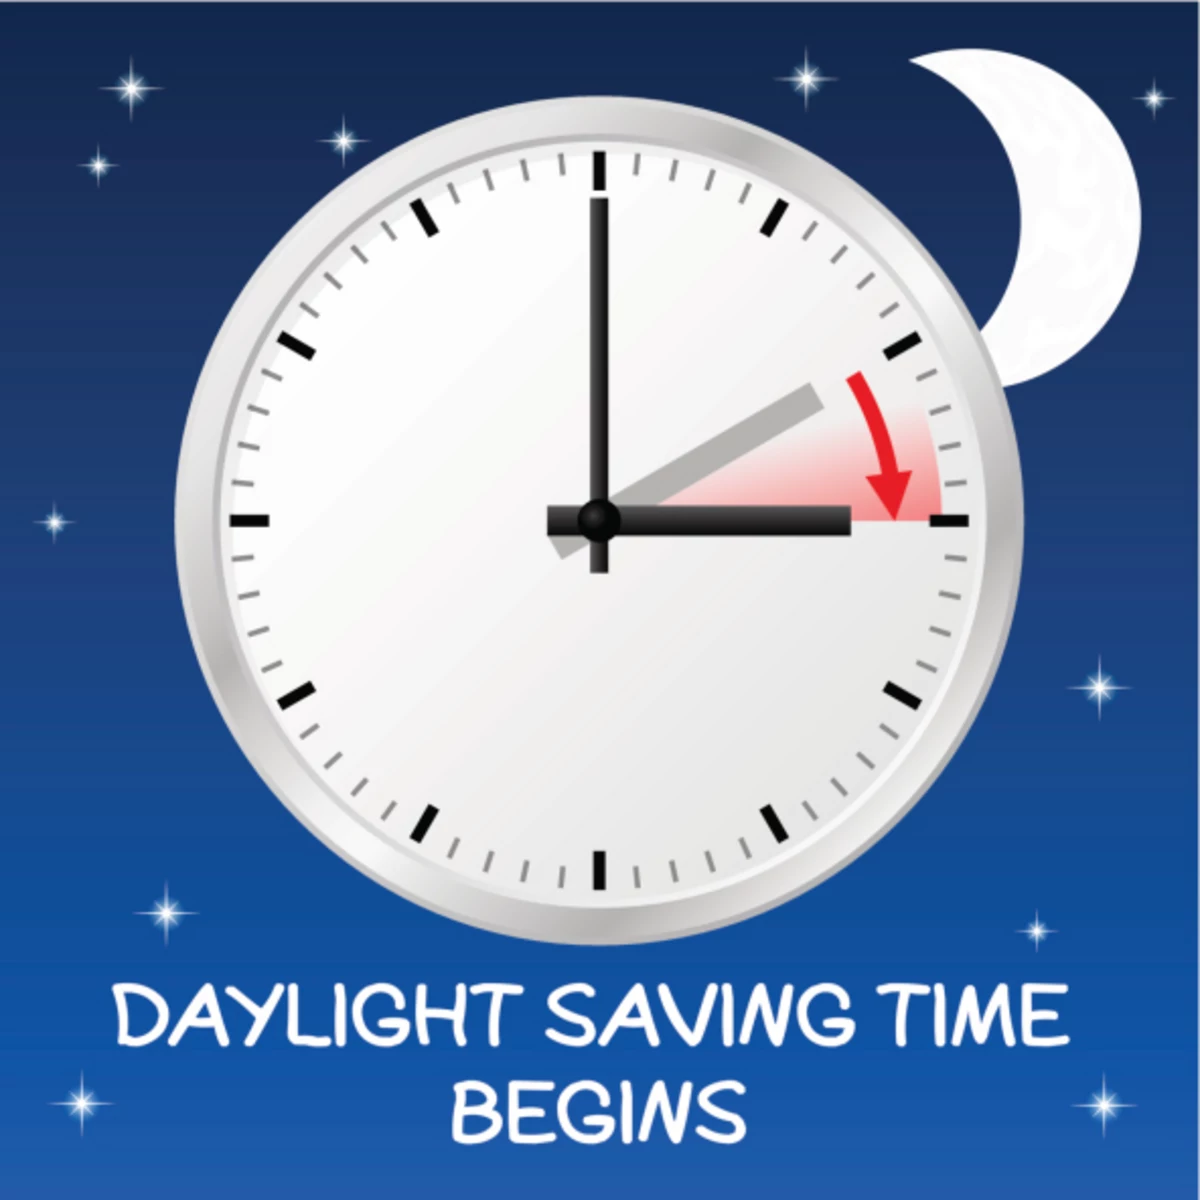 Real Health Benefits to Daylight Saving Time